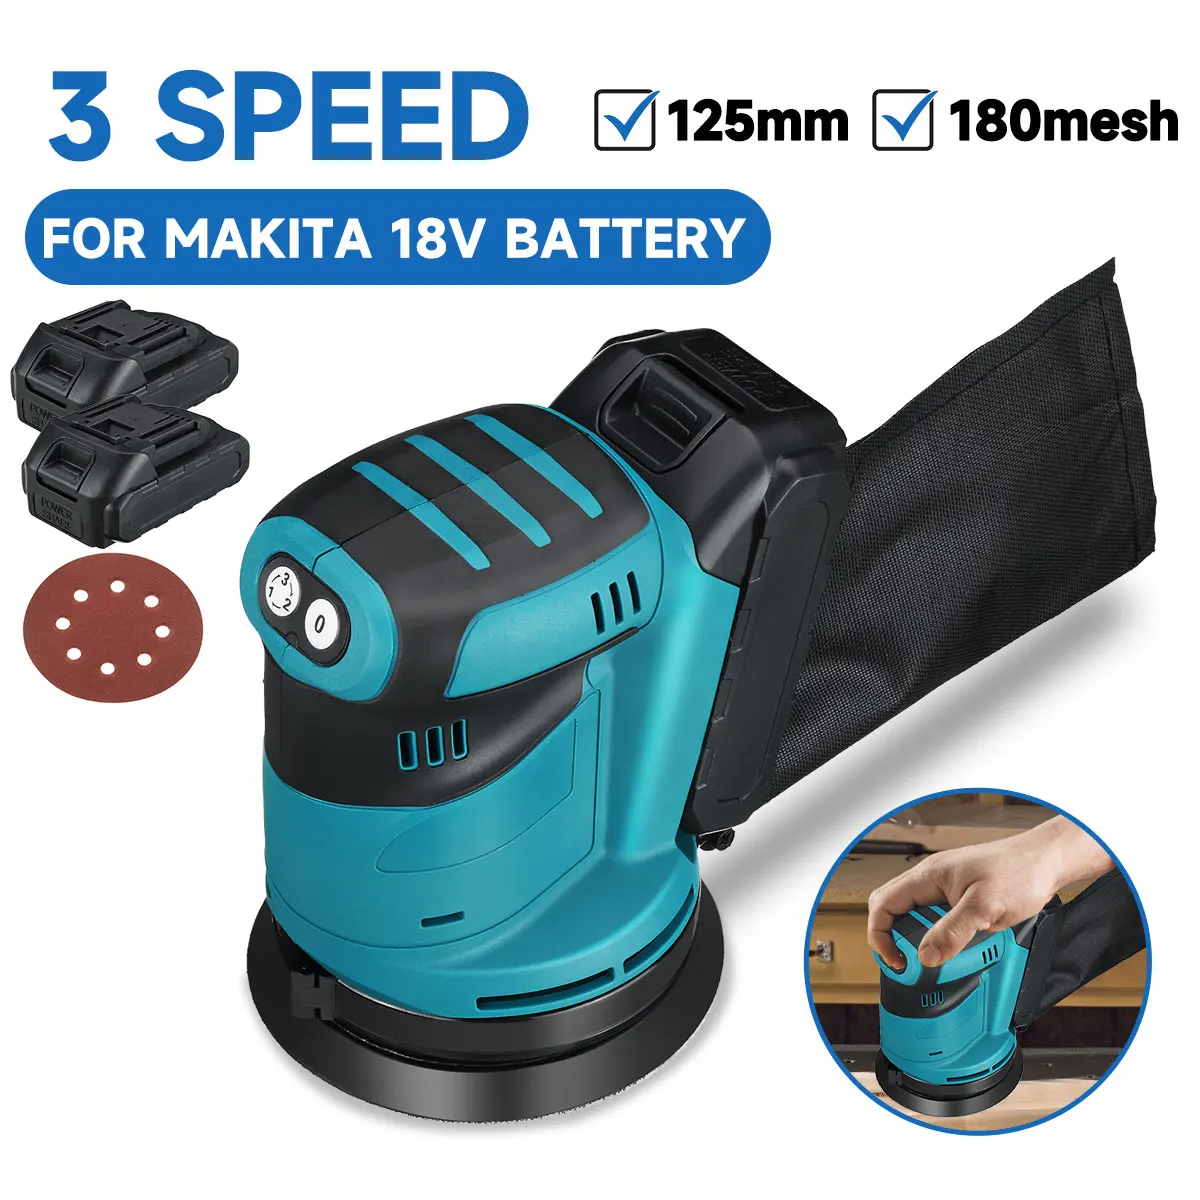 

3 Speeds Variable 125mm Electric Sander Cordless Wood Grinder Polishing Grinding Machine with Sandpaper for Makita 18V Battery